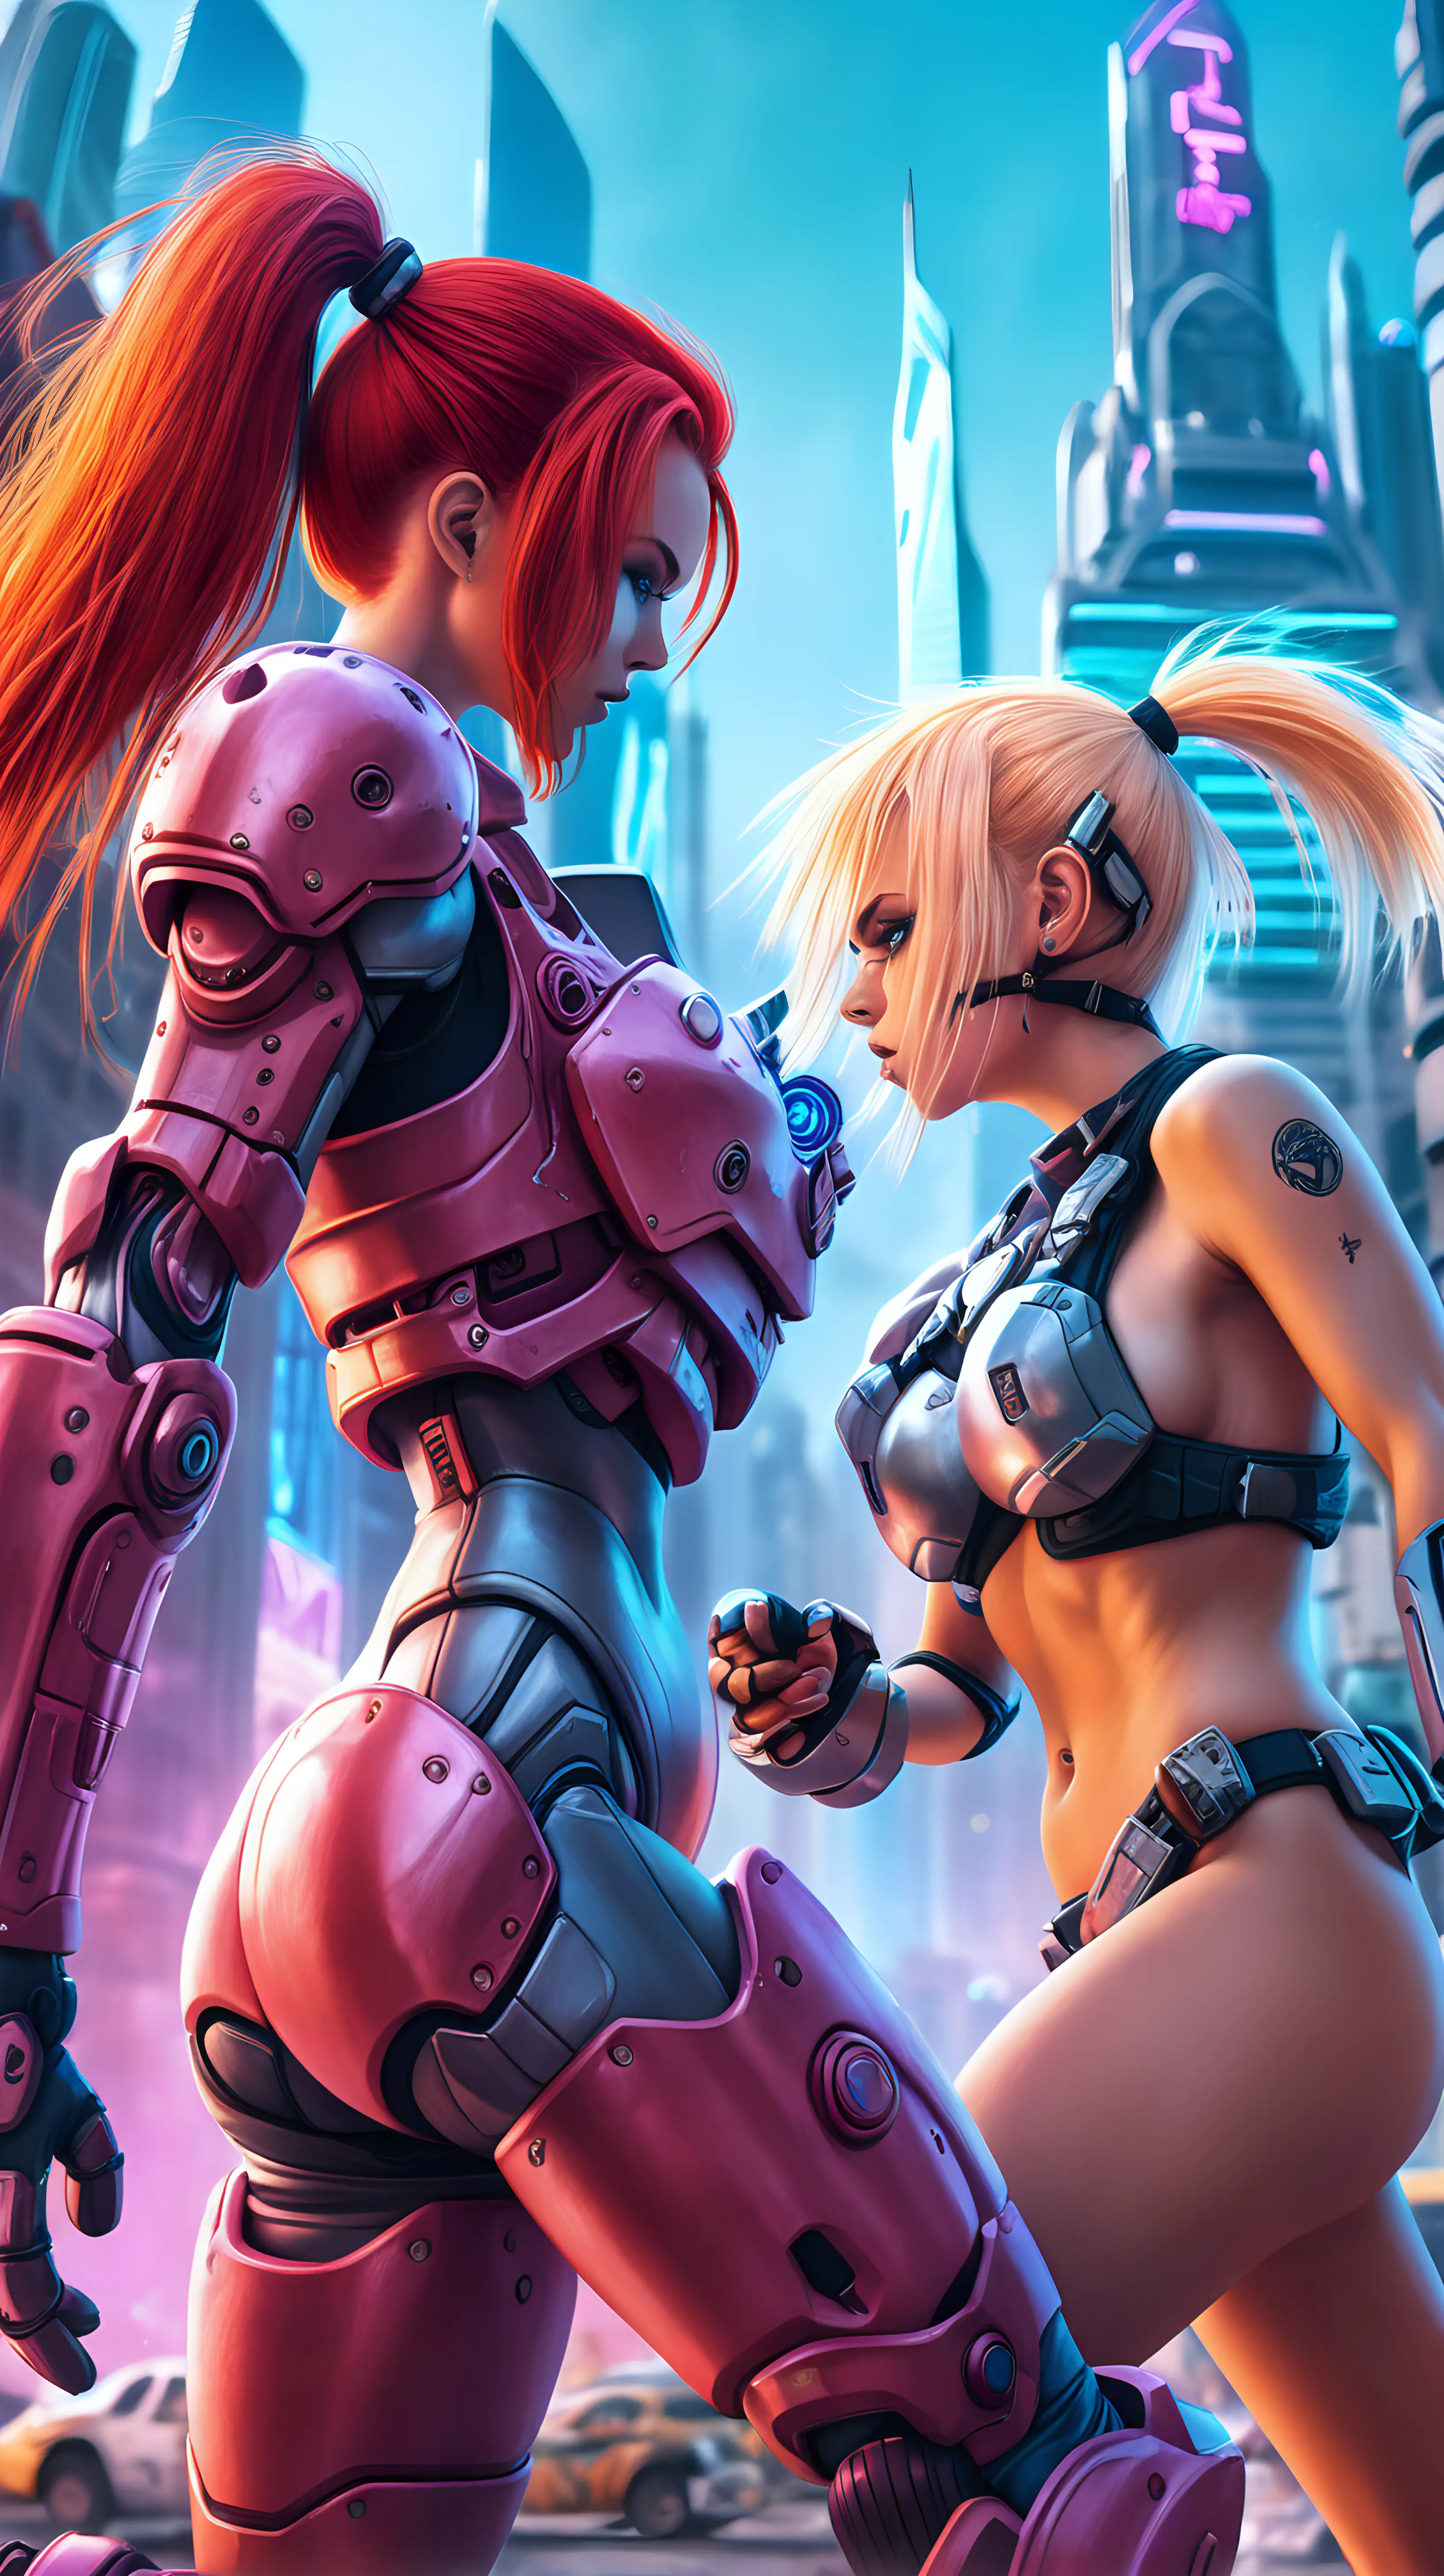 Fierce RedHaired Warrior Battles Topless Blonde in Cyberpunk Cityscape